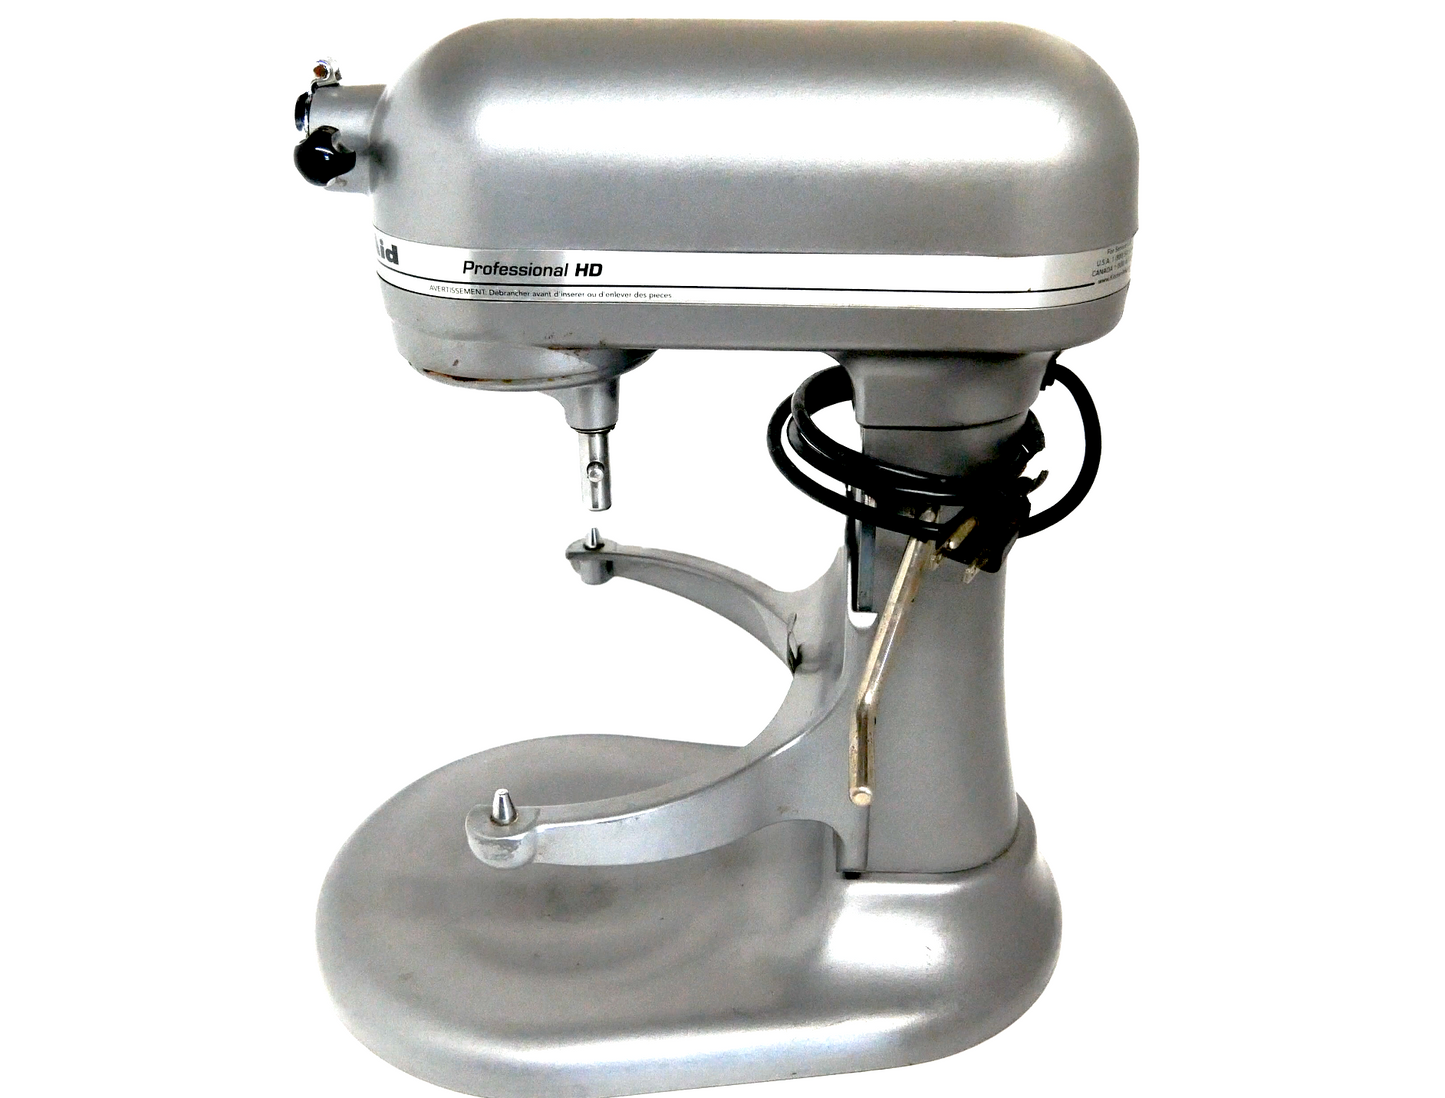 KitchenAid Professional 5-Qt Lift Bowl Stand Mixer With